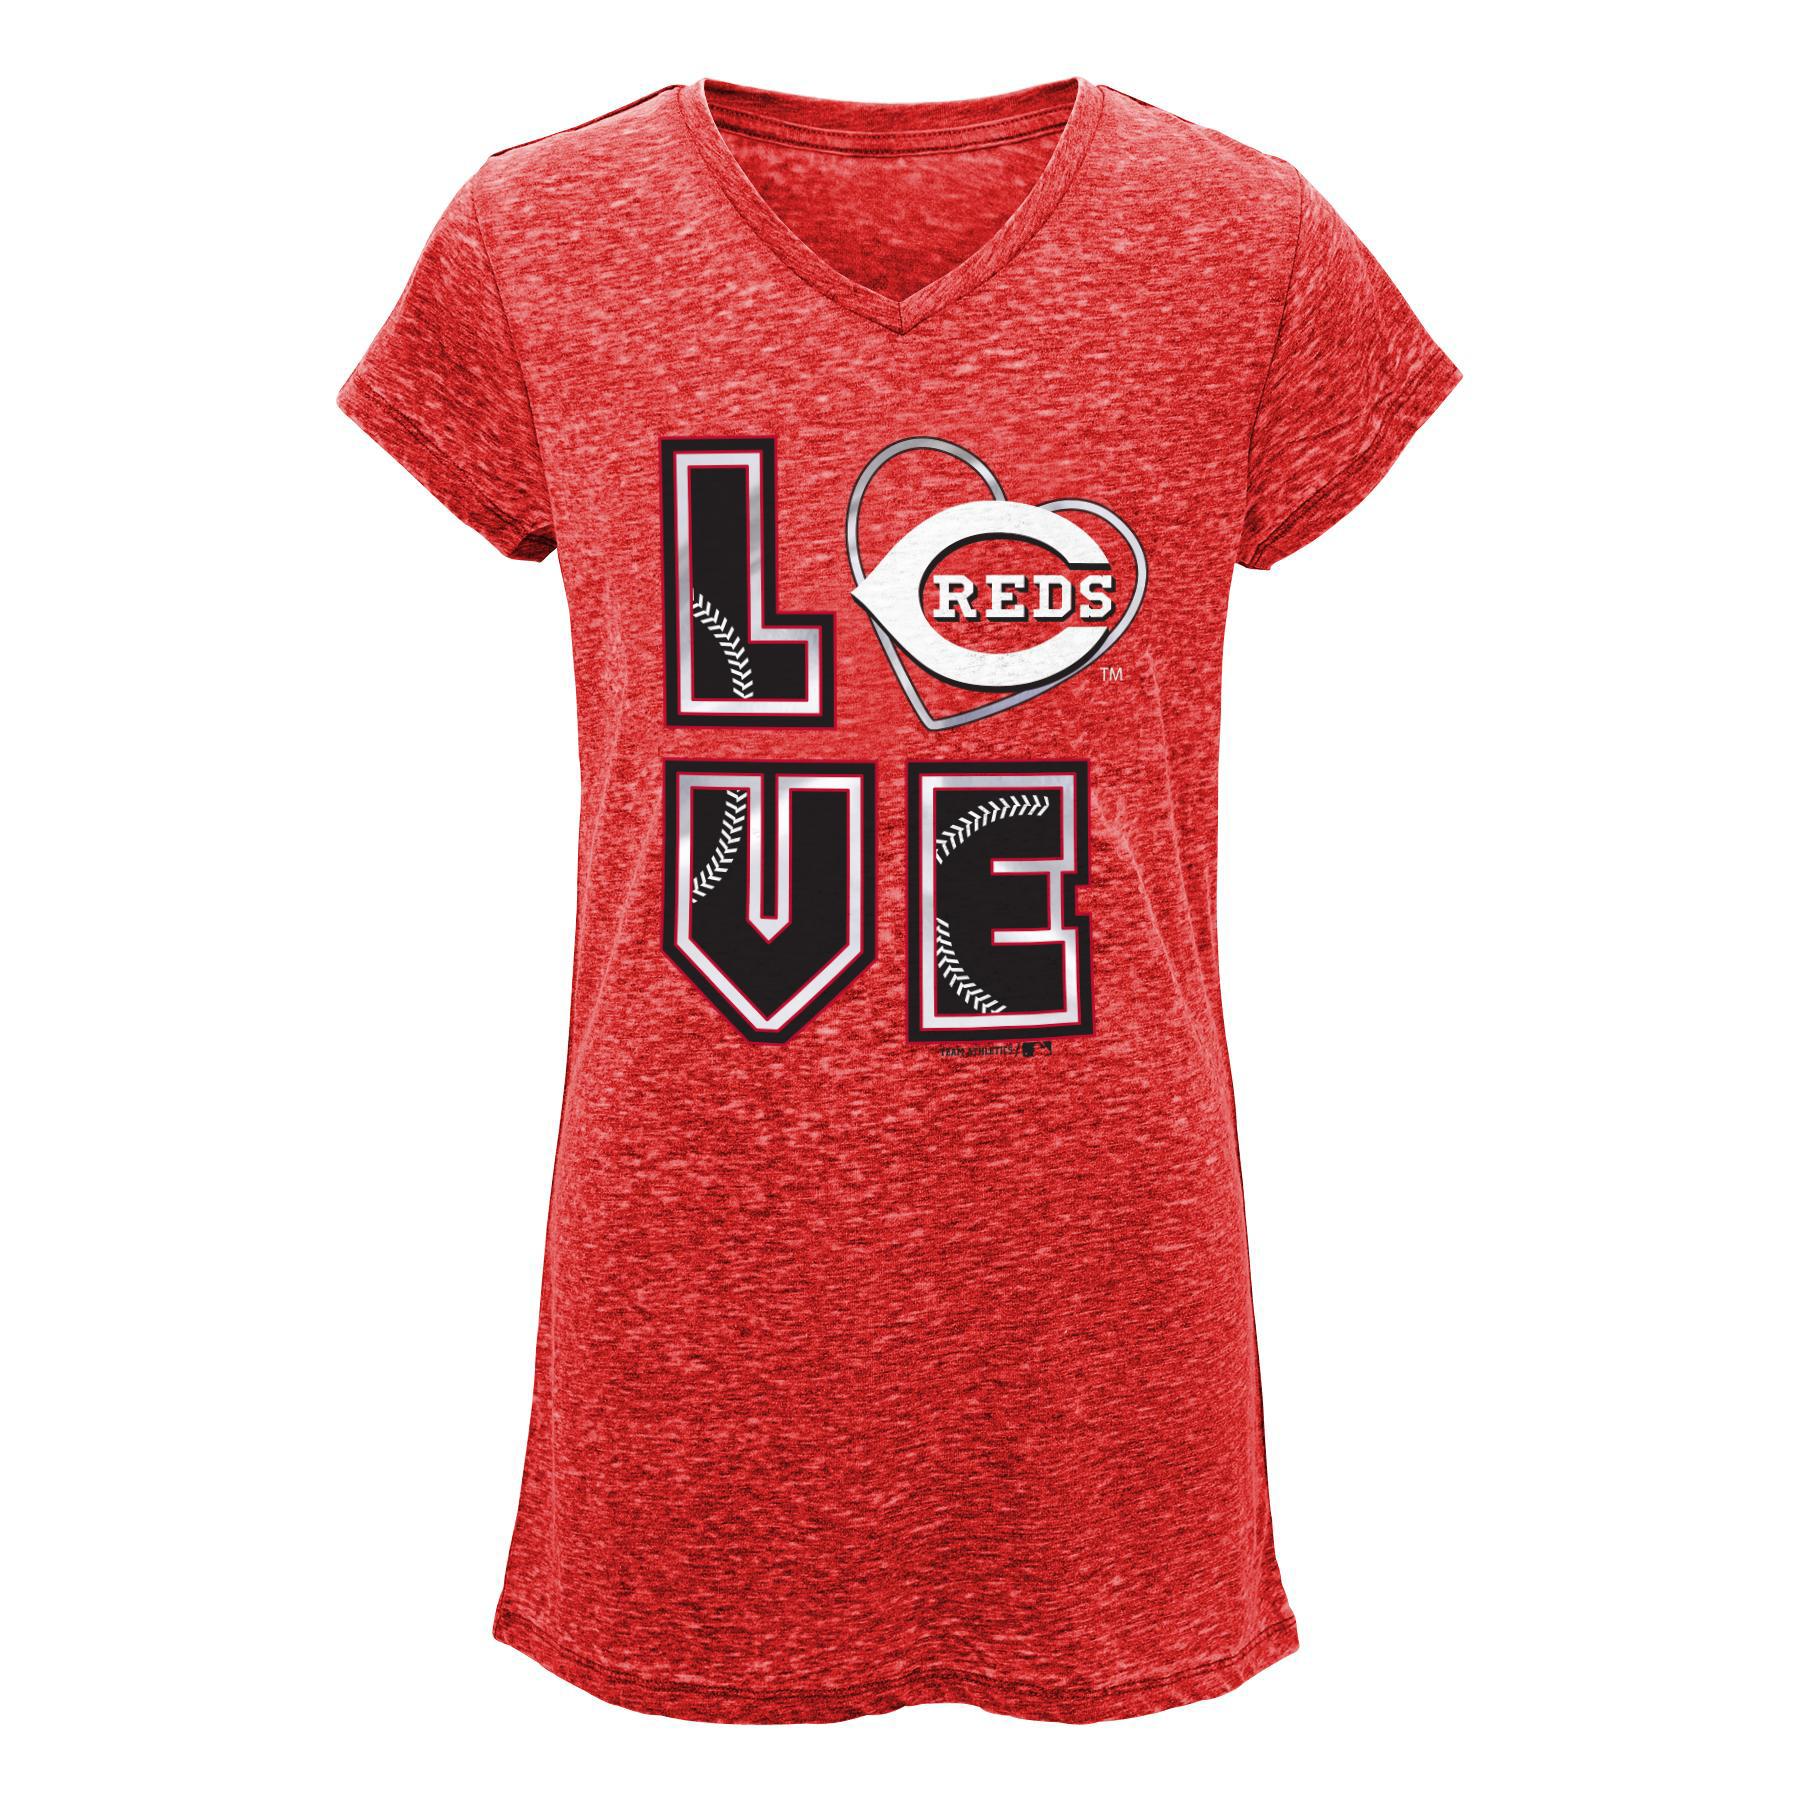 MLB Girls' Burnout T-Shirt - Cincinnati Reds